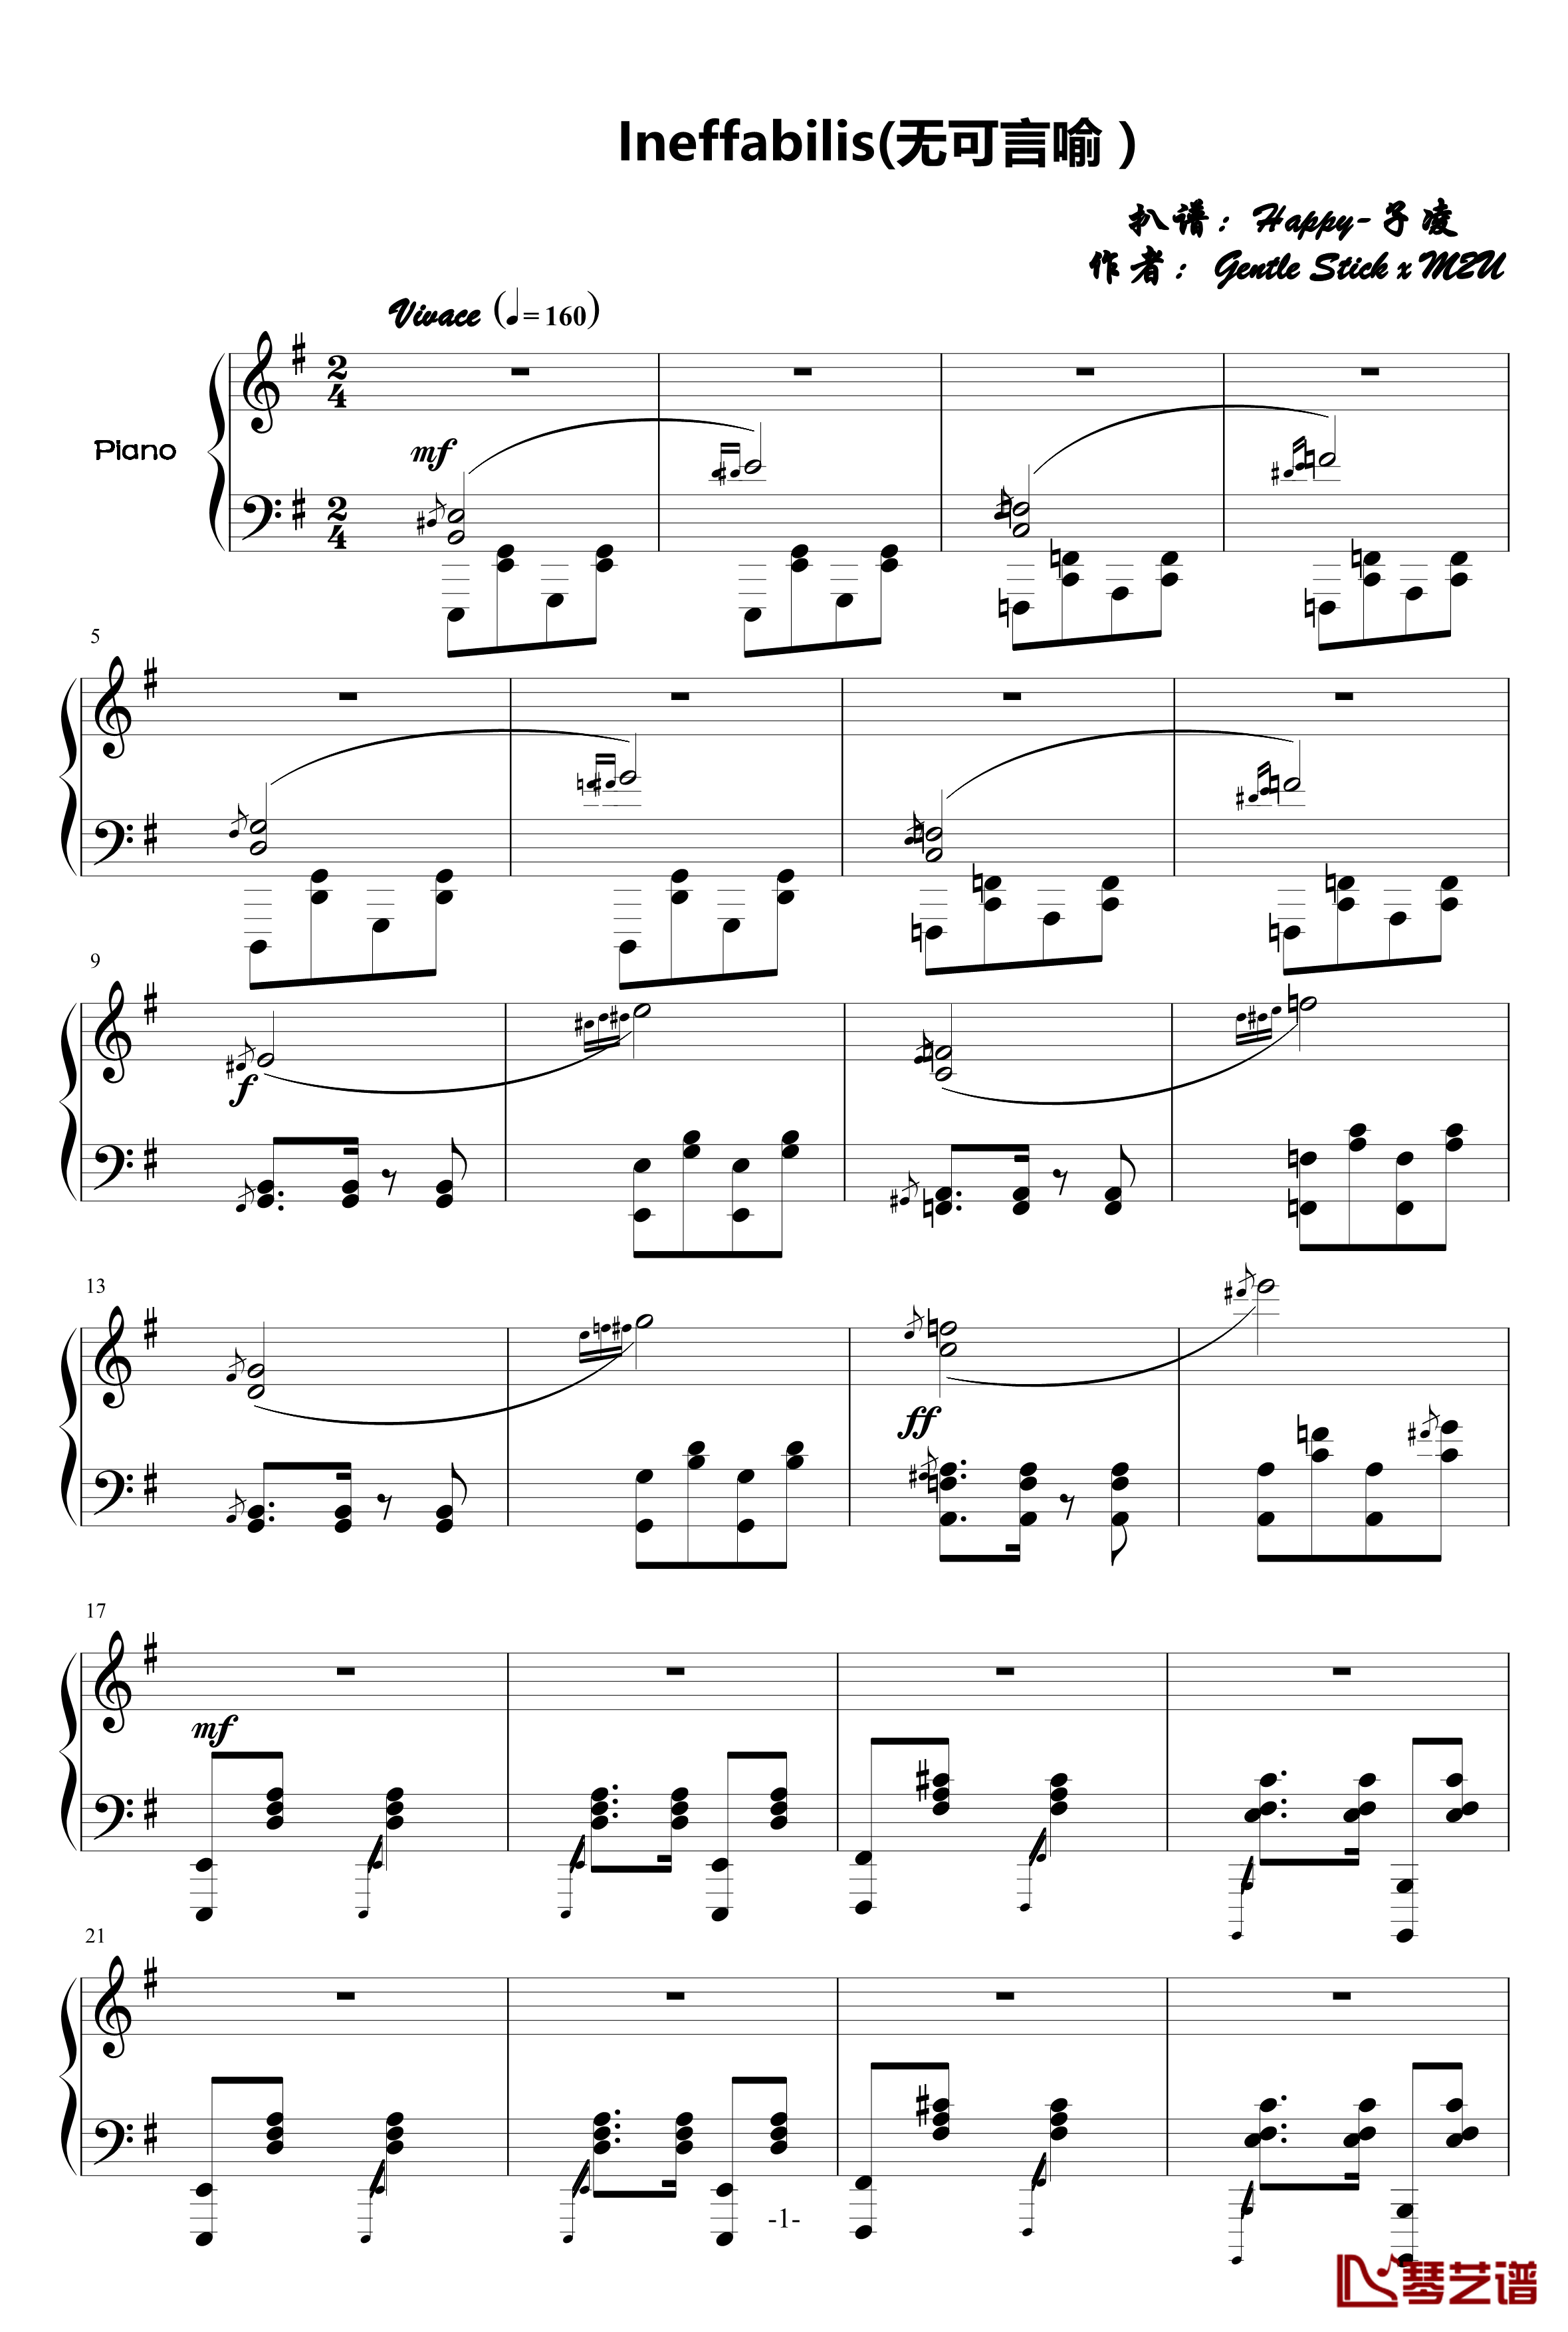 Ineffabilis钢琴谱-无可言喻-piano solo-M2U1